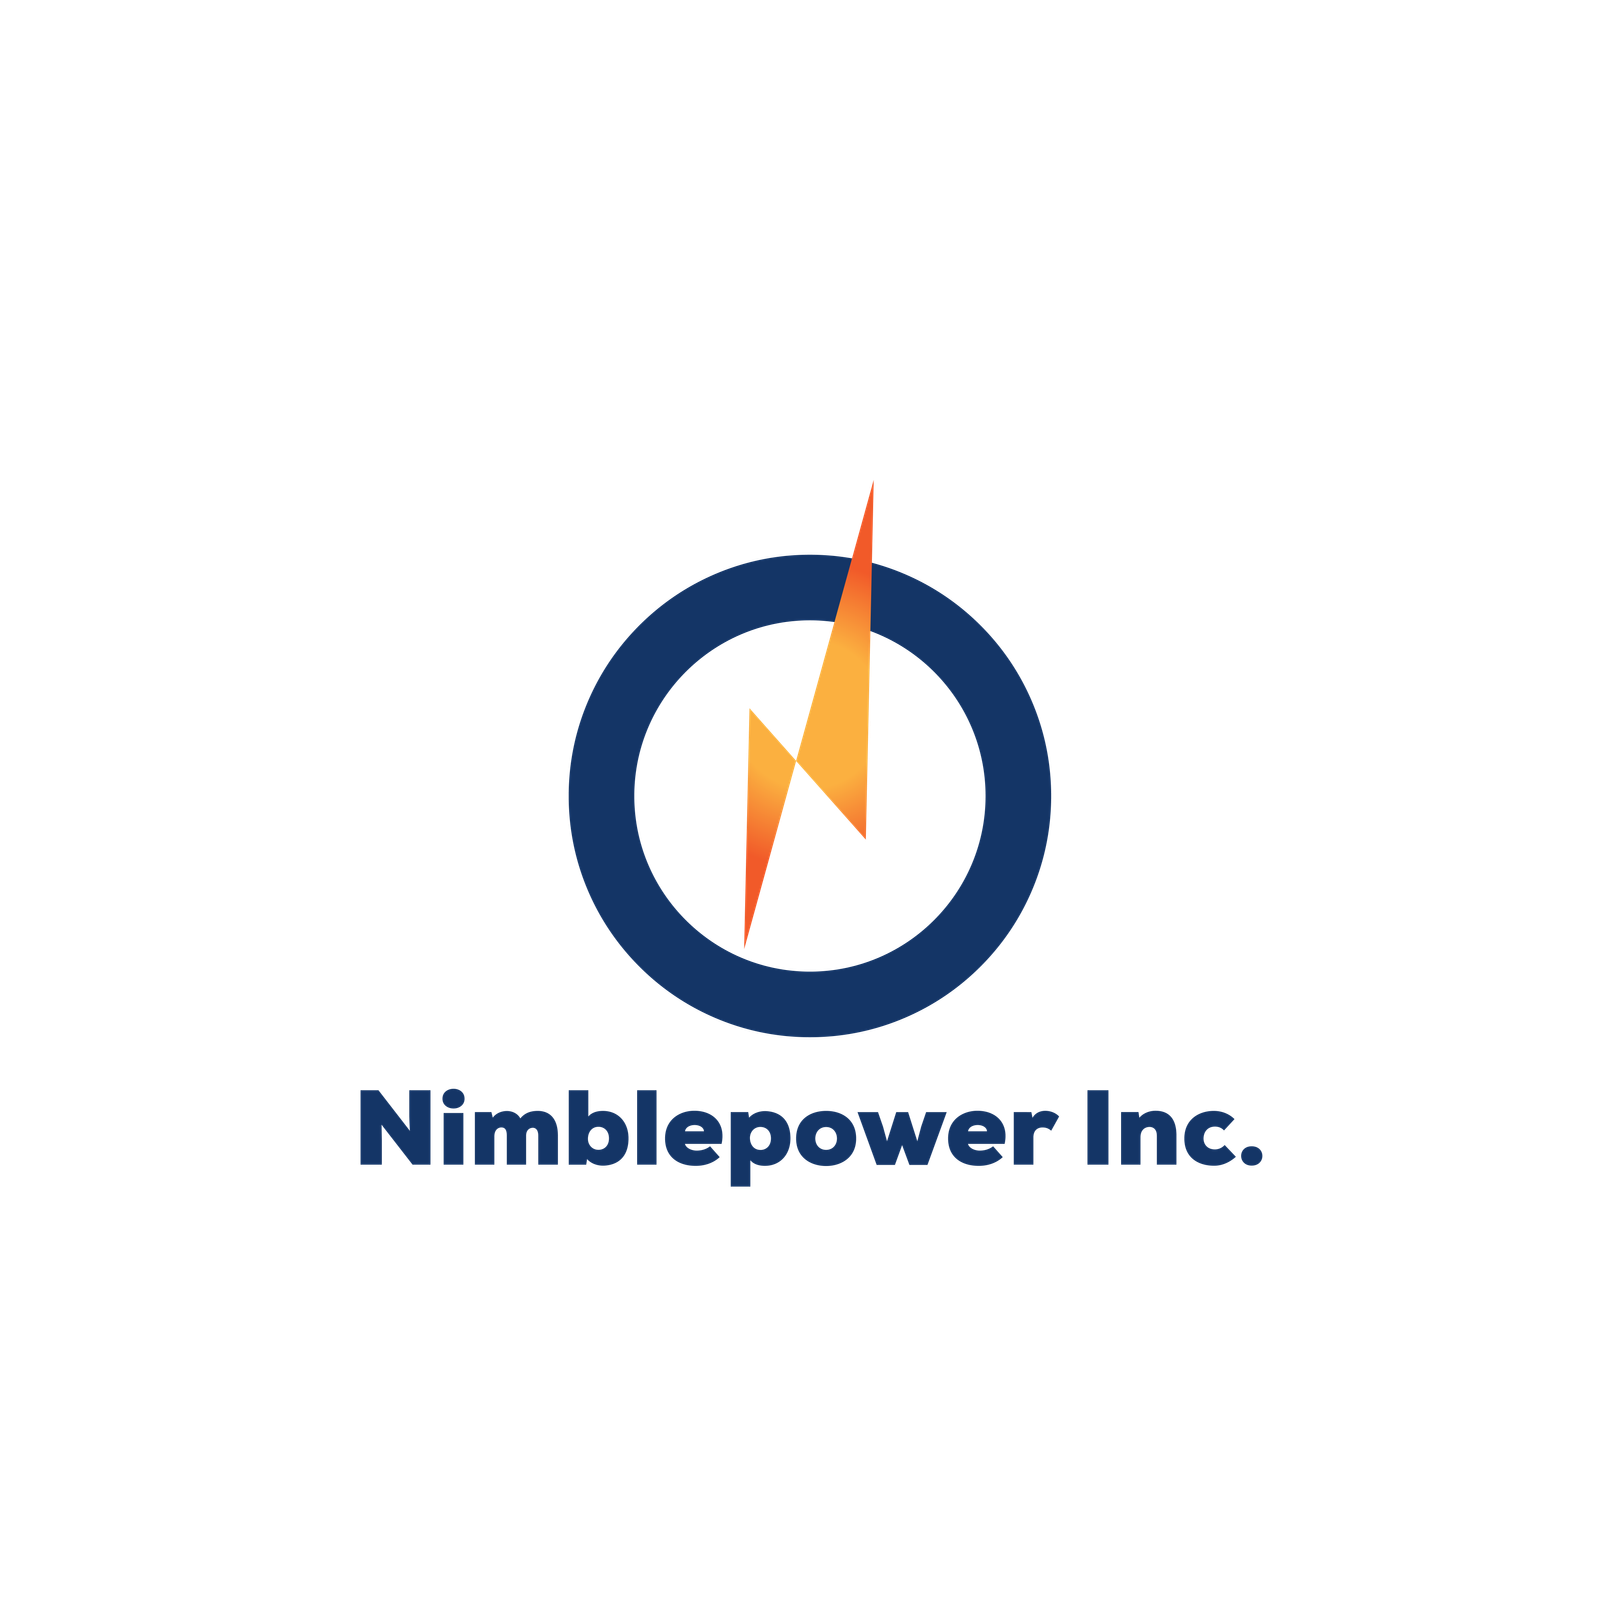 Nimblepower